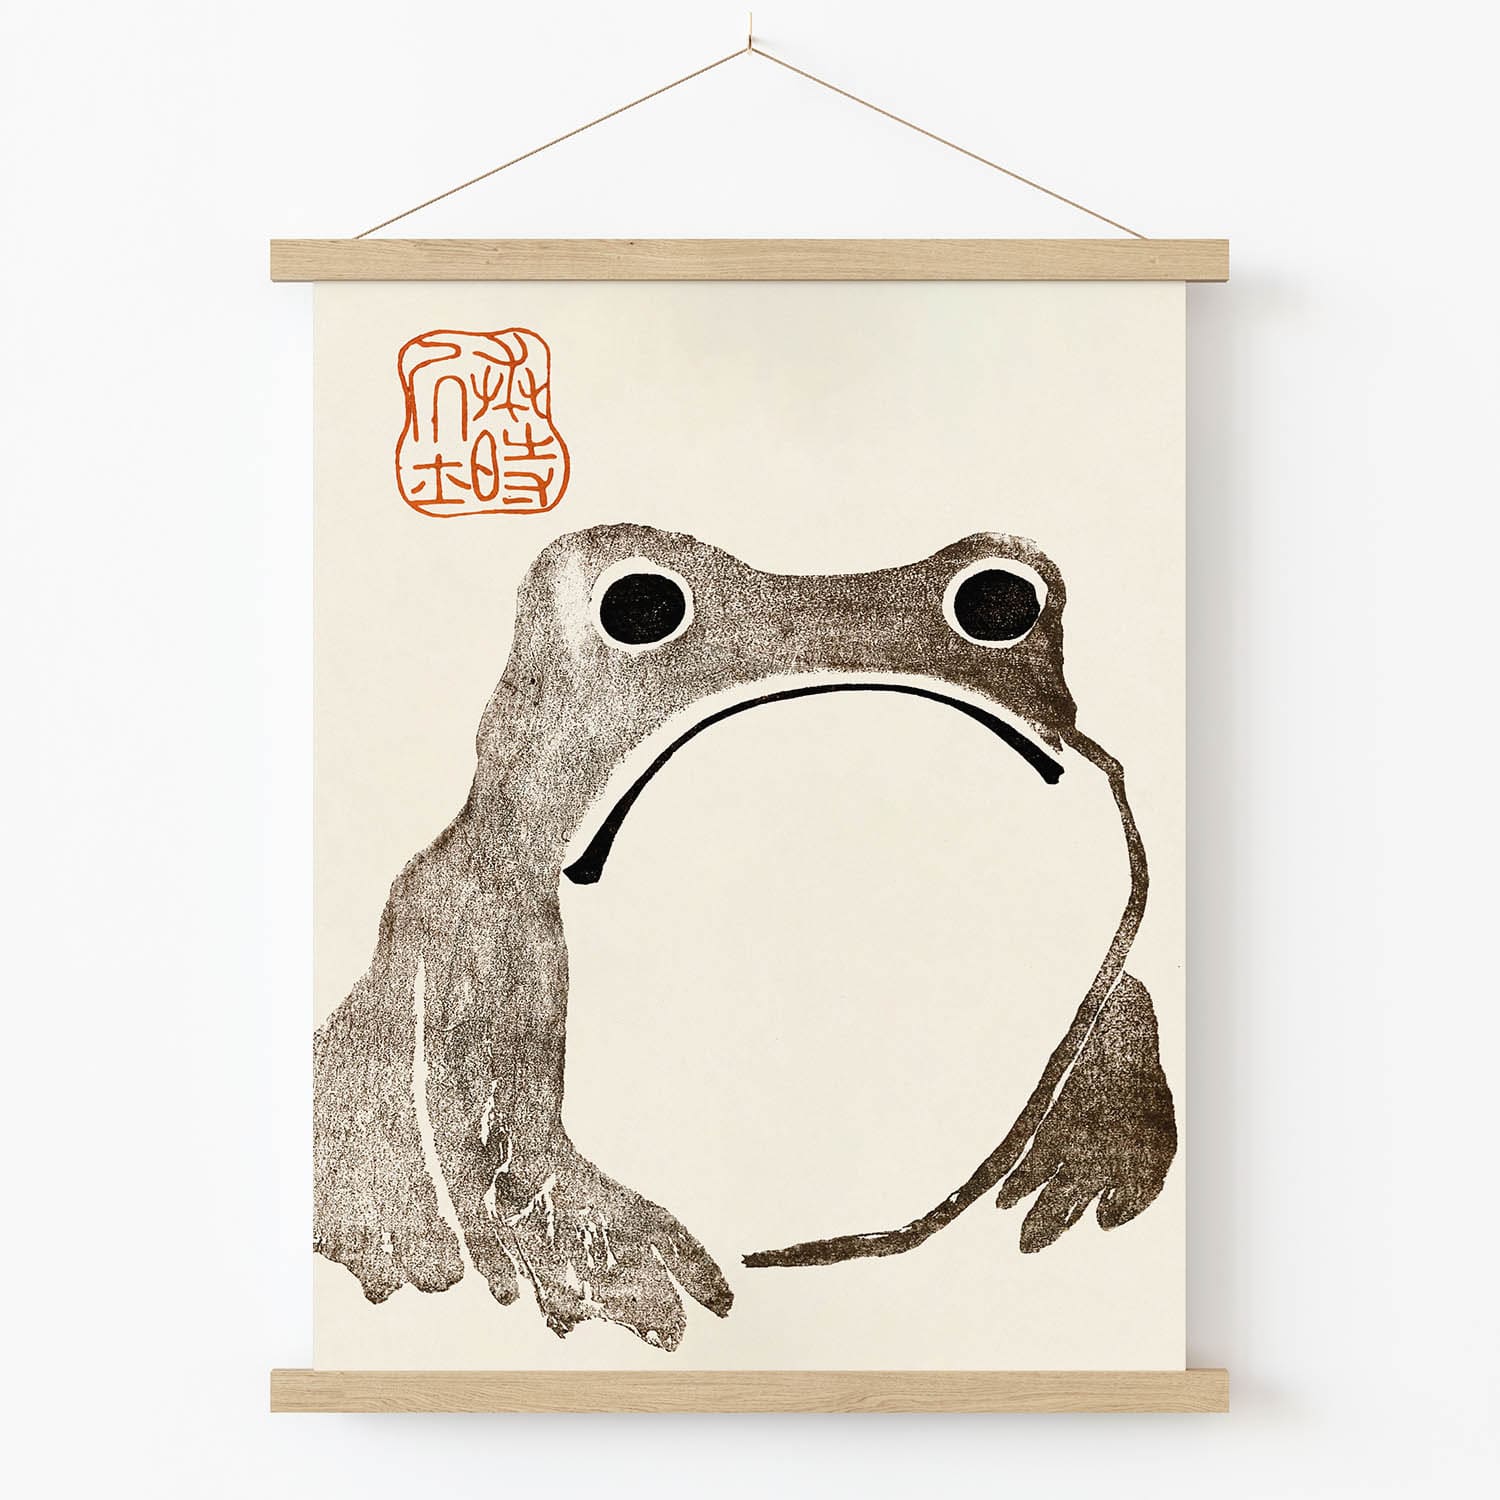 Grumpy Frog Art Print in Wood Hanger Frame on Wall